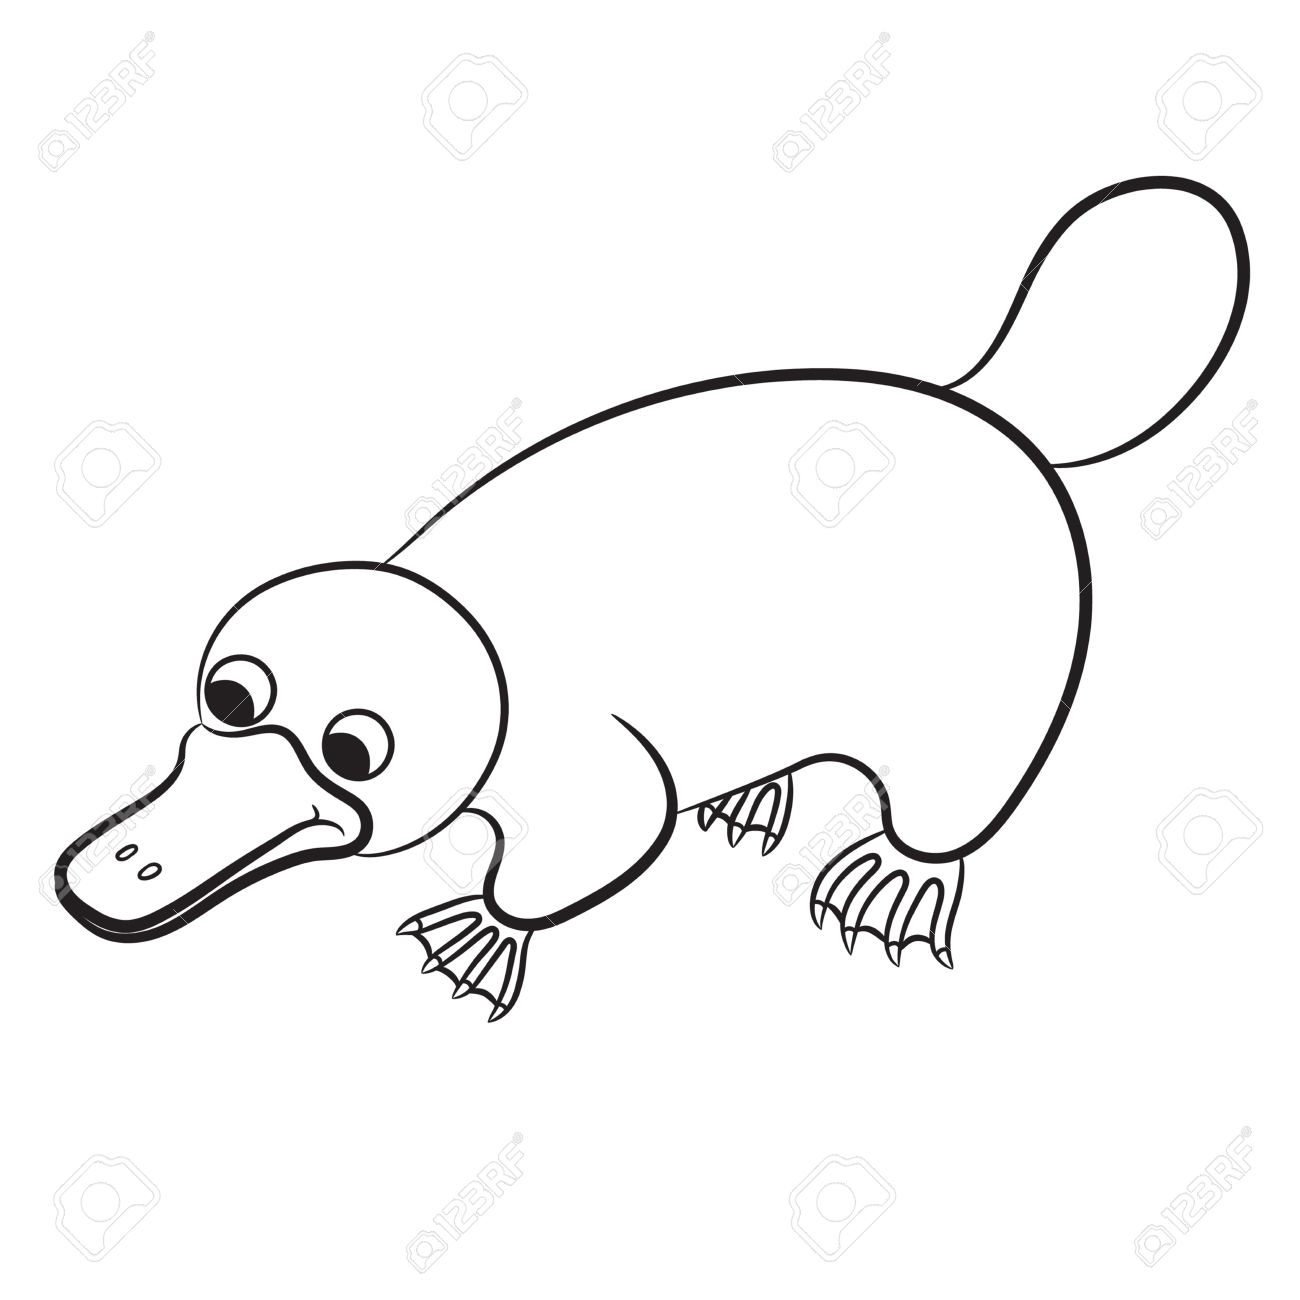 Platypus Drawing at GetDrawings | Free download